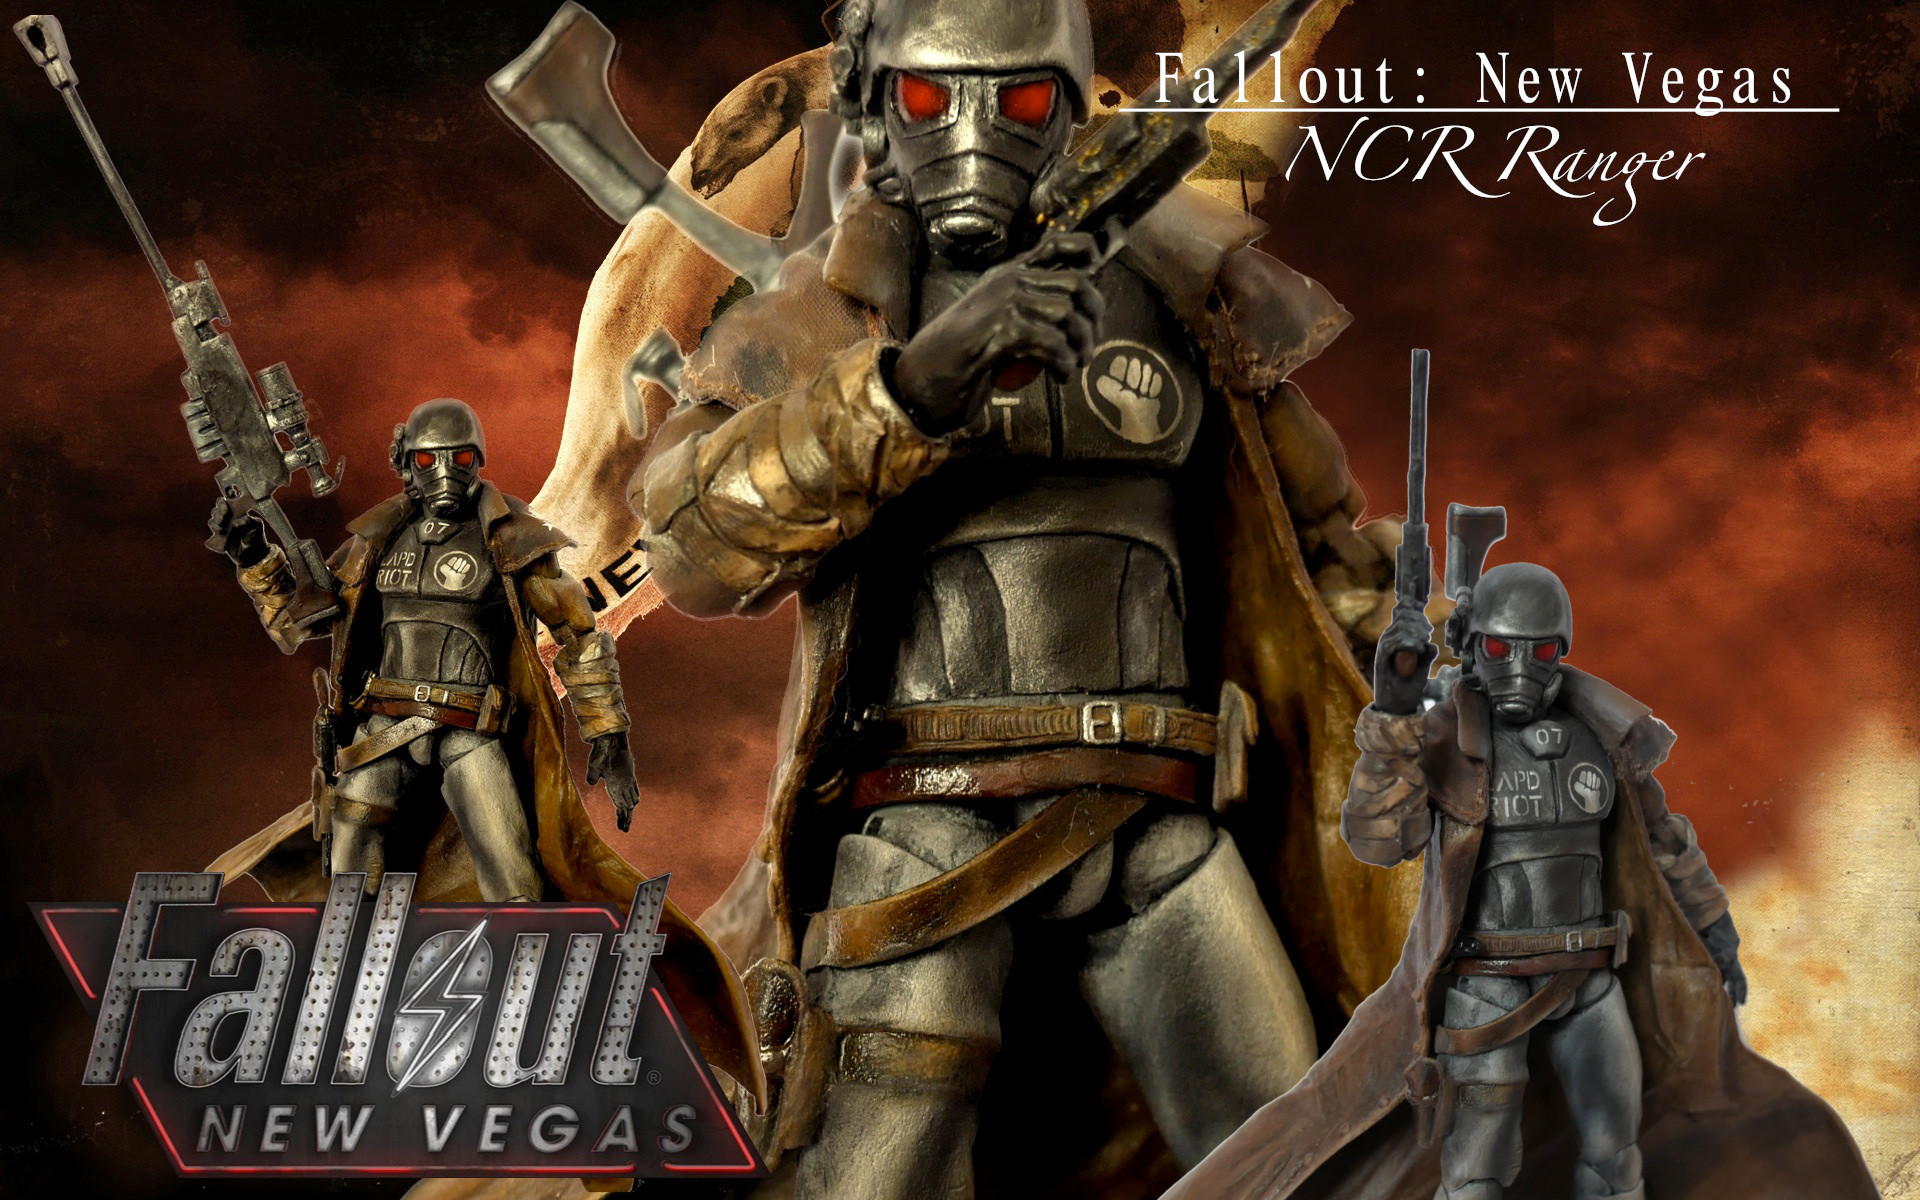 Michael Enea Fallout New Vegas Custom Ncr Ranger Action Figure